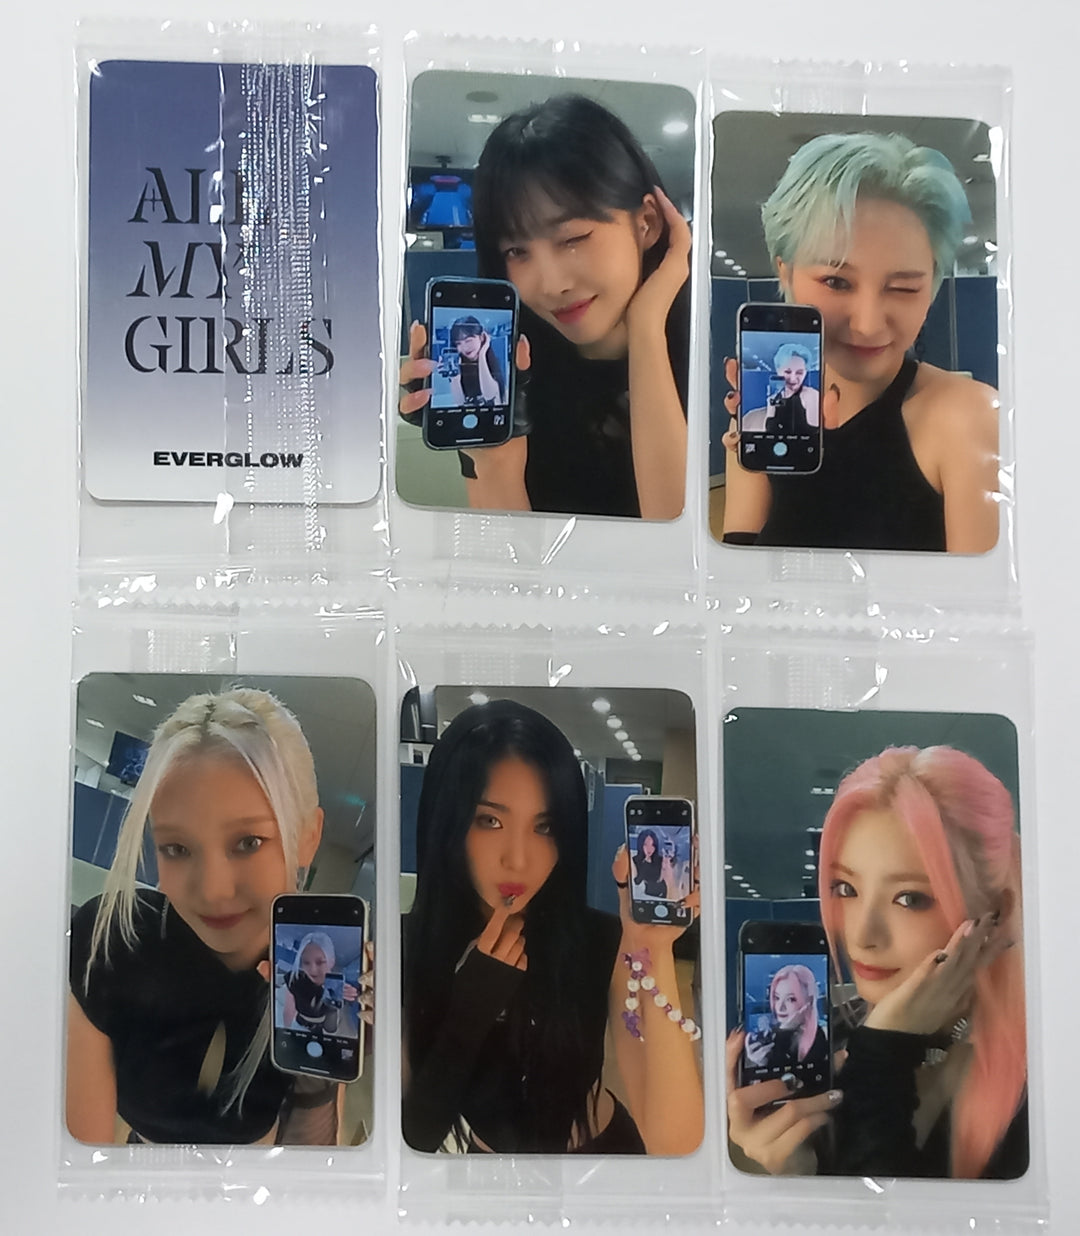 Everglow "ALL MY GIRLS" - Ktown4U Fansign Event Photocard Round 3 [23.10.10]